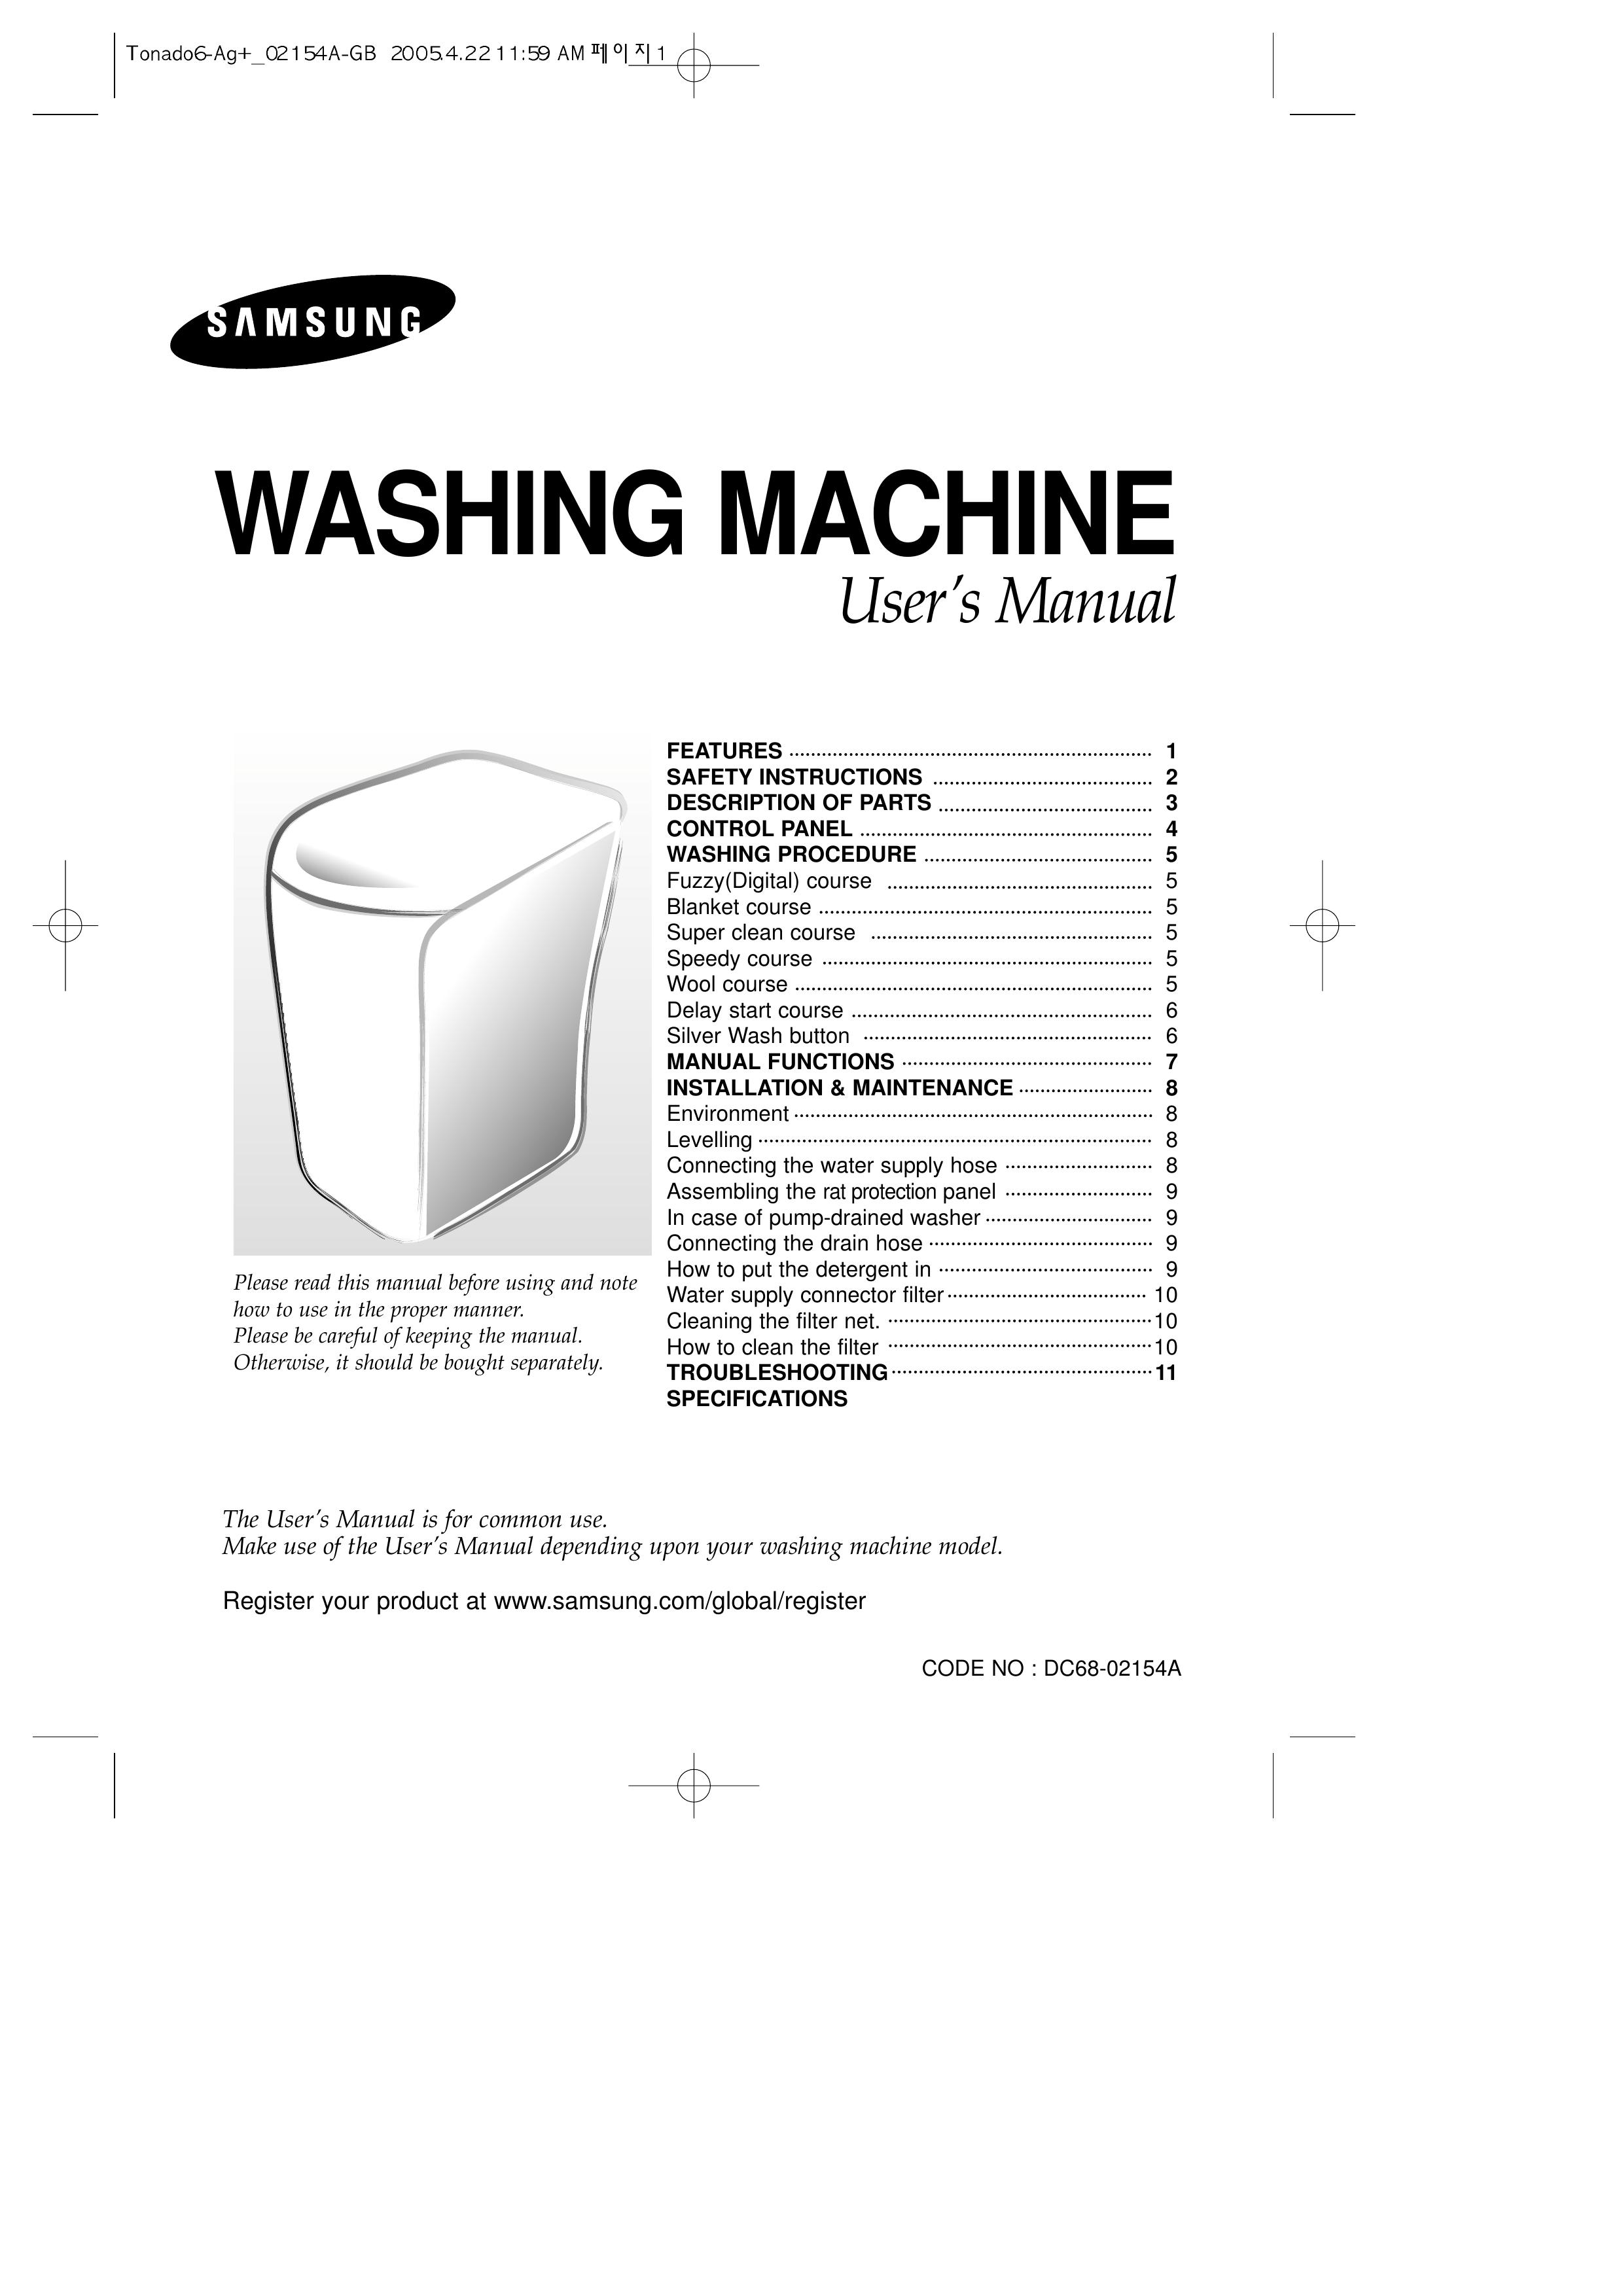 Samsung DC68-02154A Washer User Manual